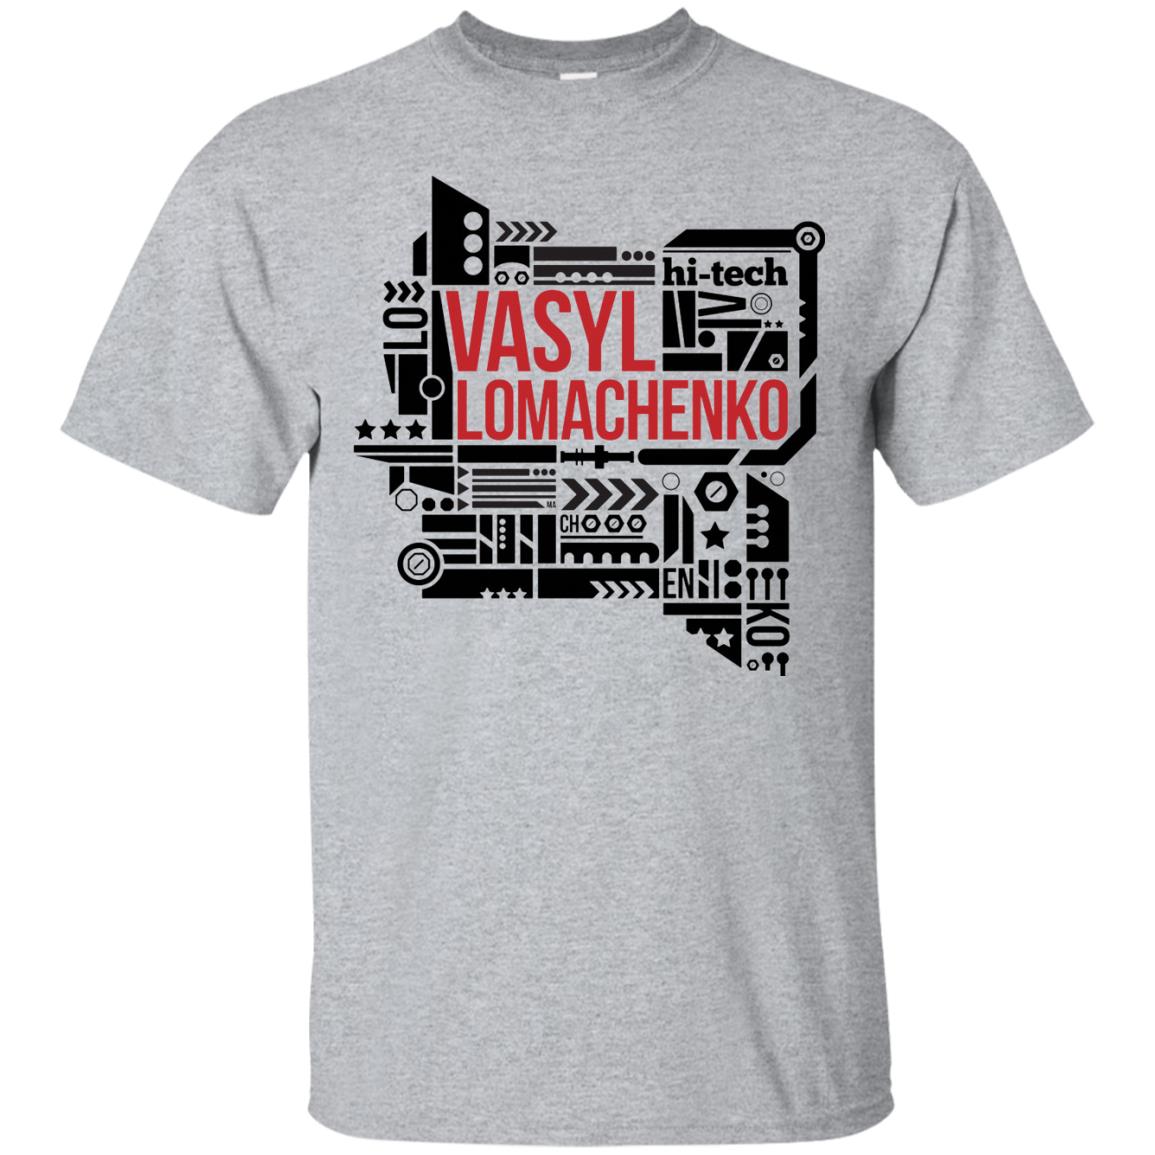 vasyl lomachenko shirt - sport grey